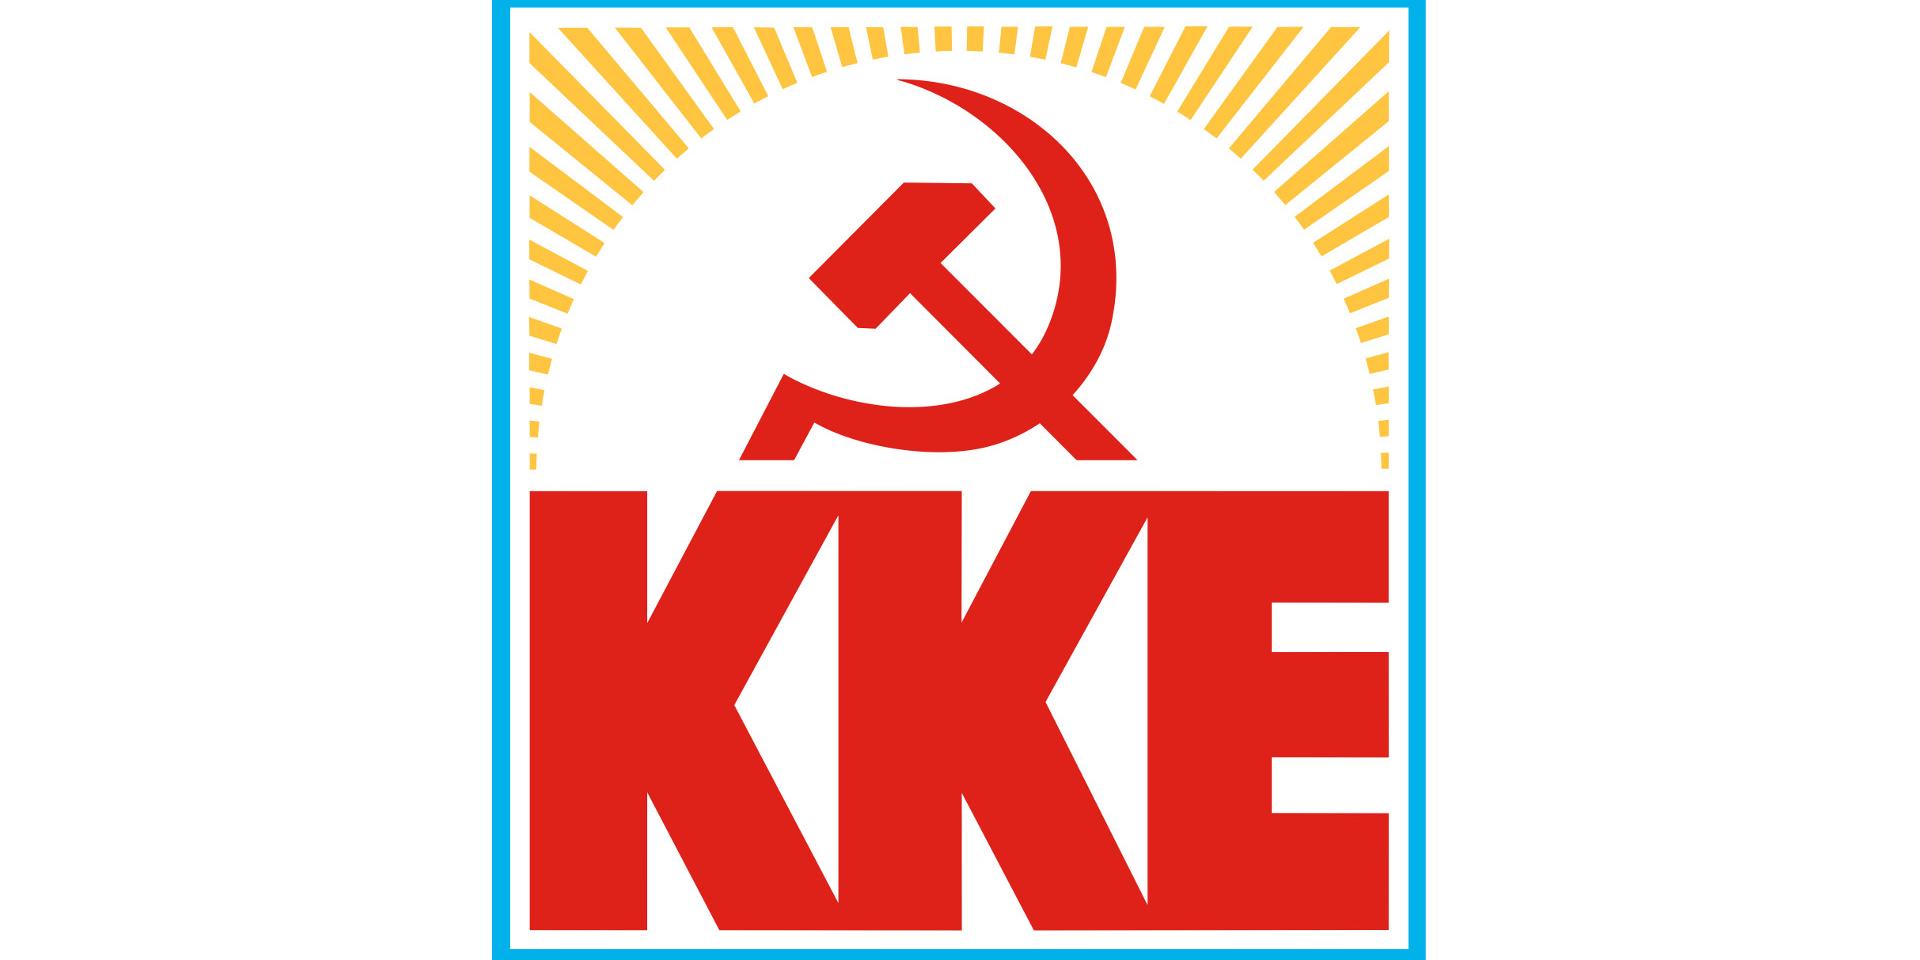 Kke_logo